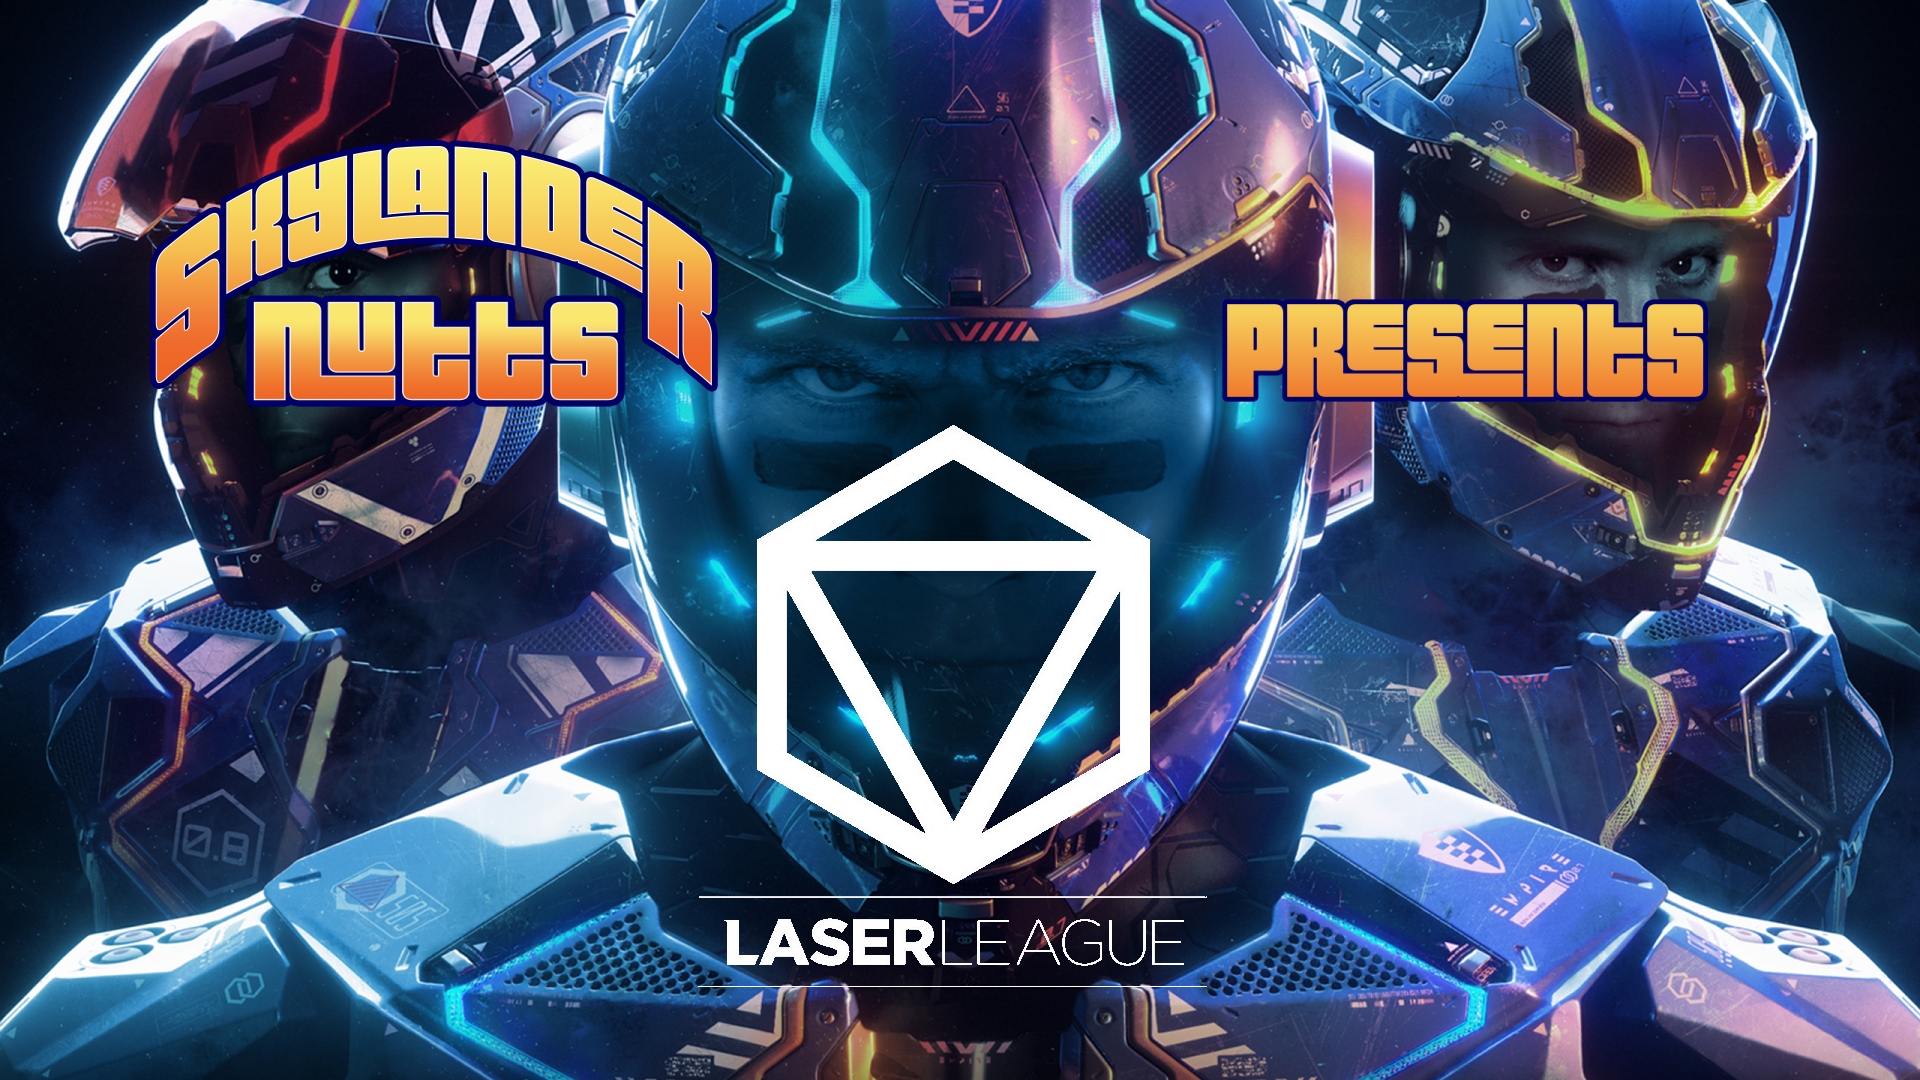 SkylanderNutts Presents - Laser League